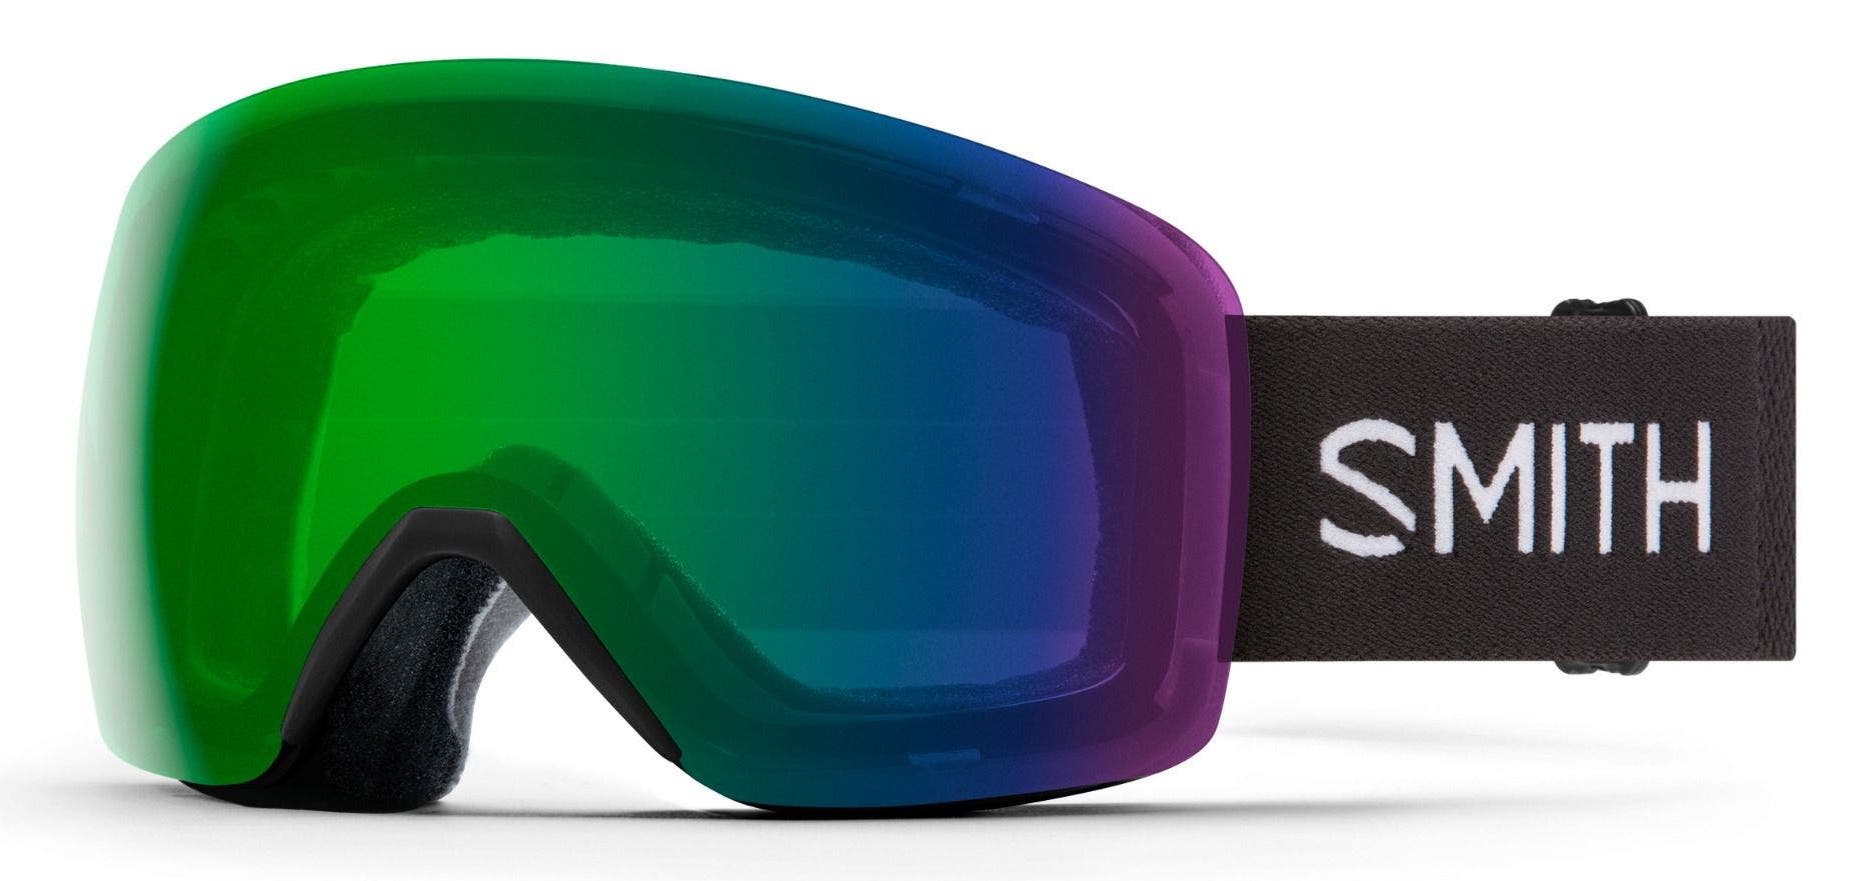 SMITH Skyline snow goggles in black with ChromaPop green mirror rimless lens.